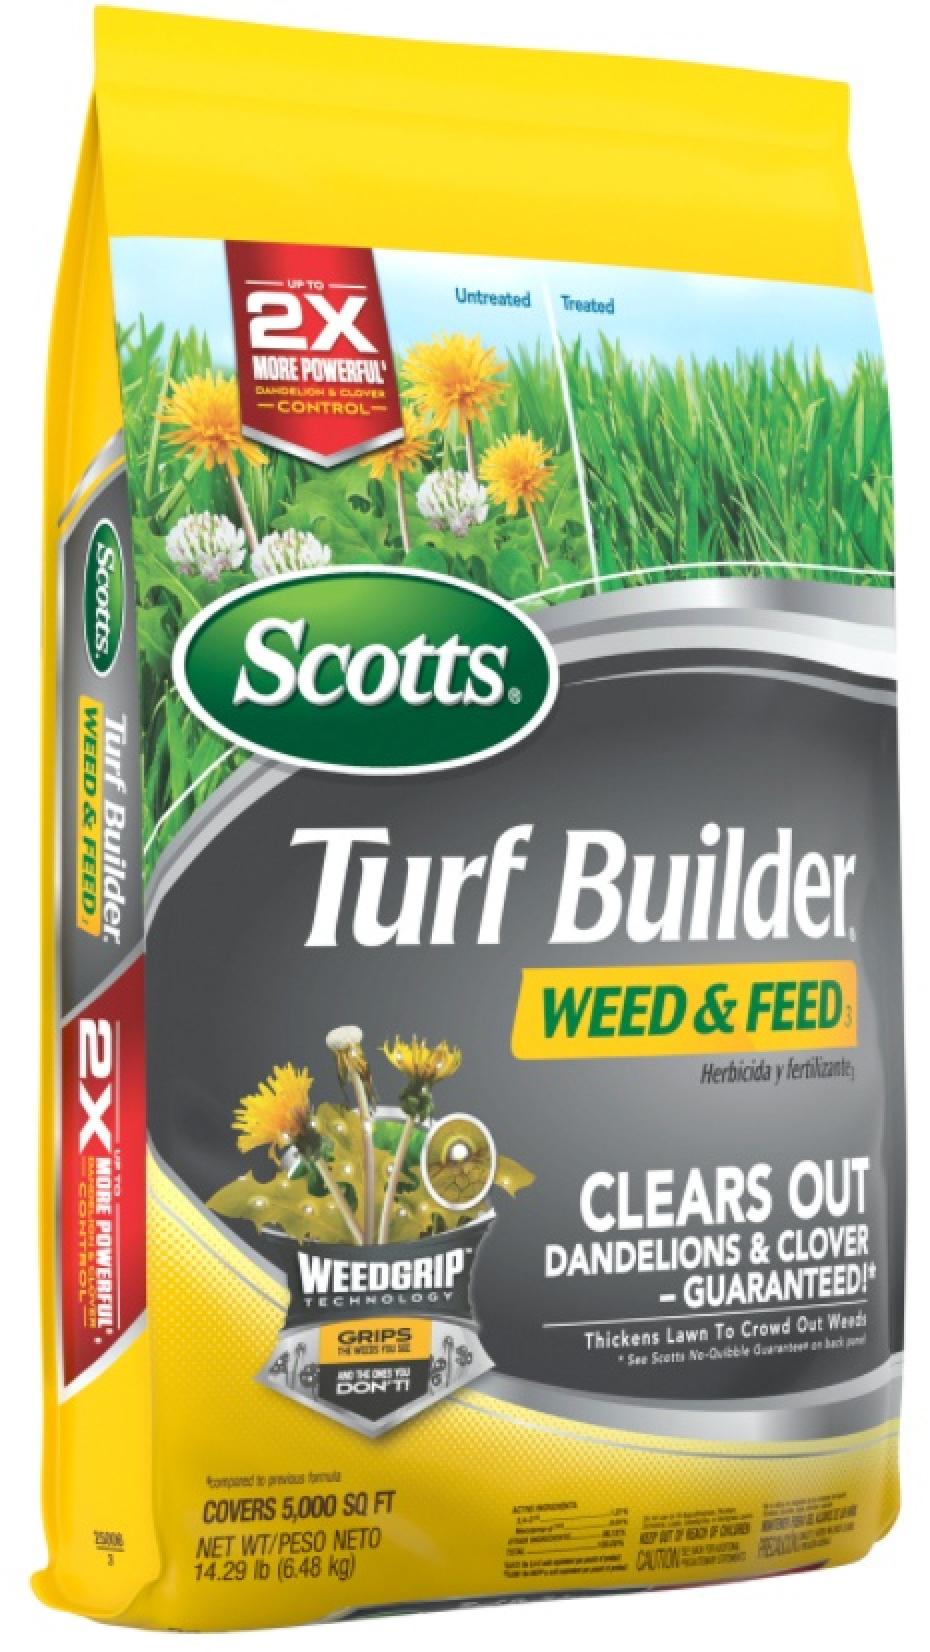 Scott's Turf Builder Weed & Feed Lawn Fertilizer